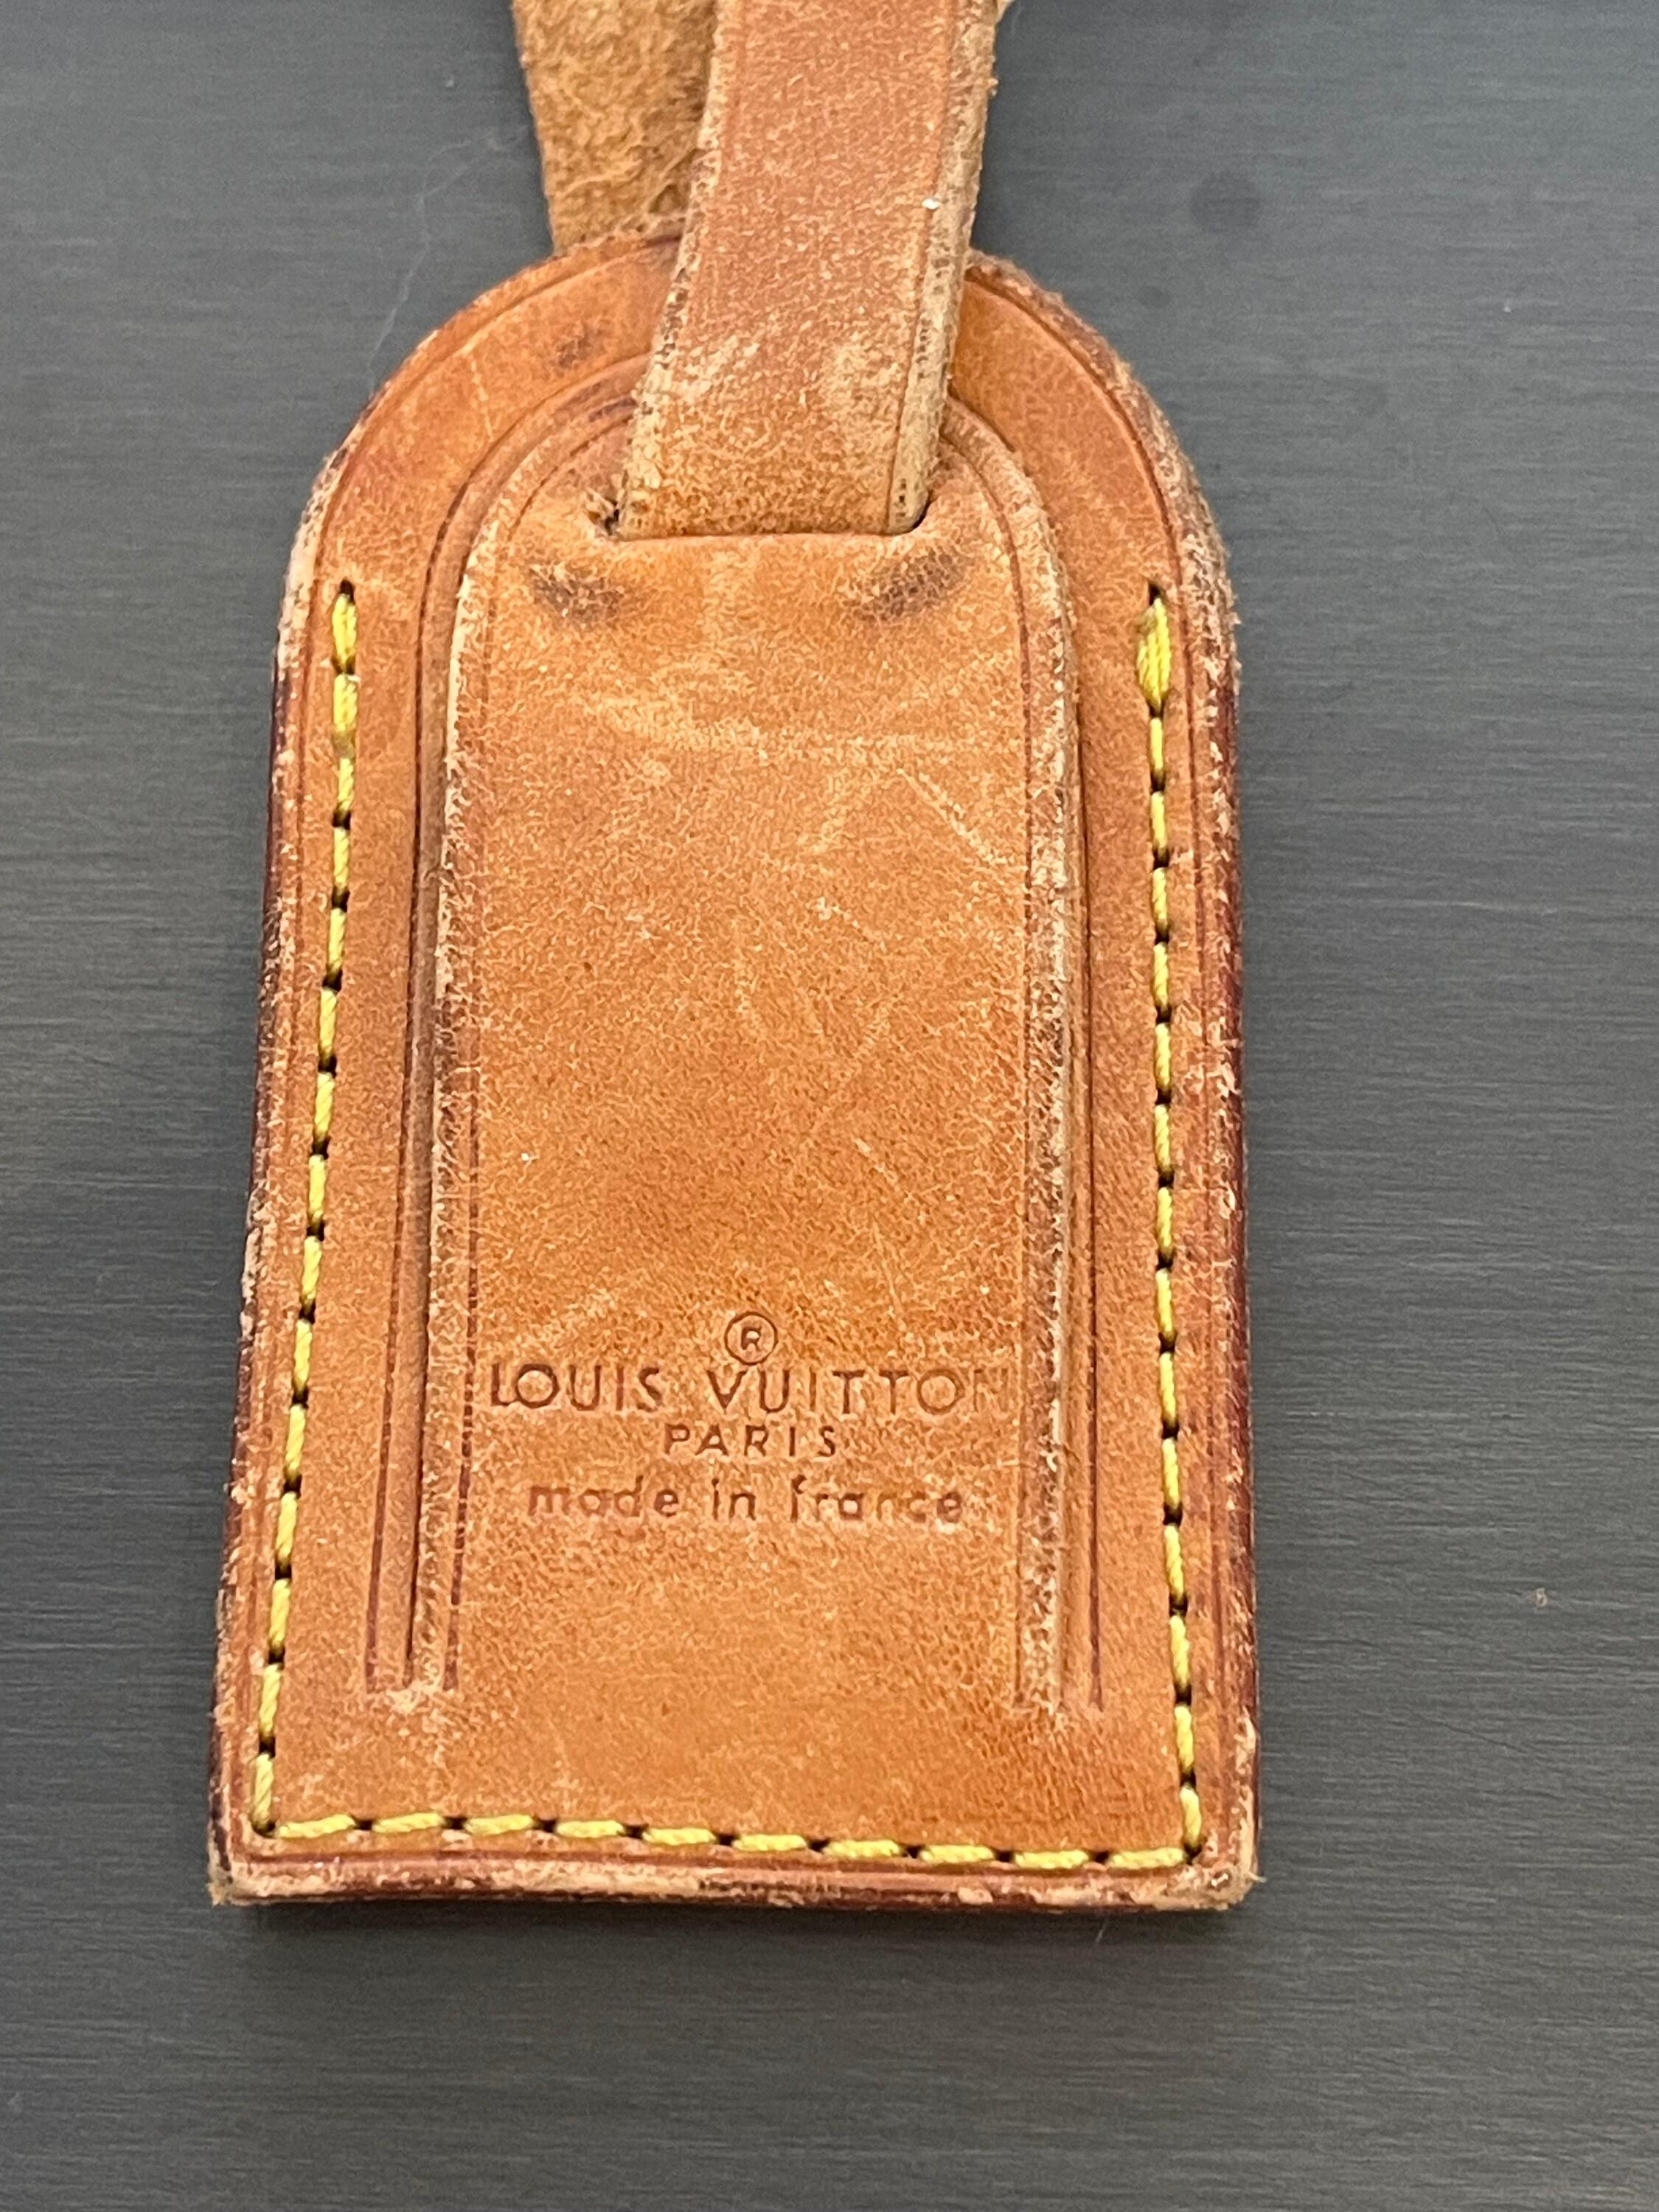 BROKEN Louis Vuitton Vachetta Leather Luggage ID Tag Small 